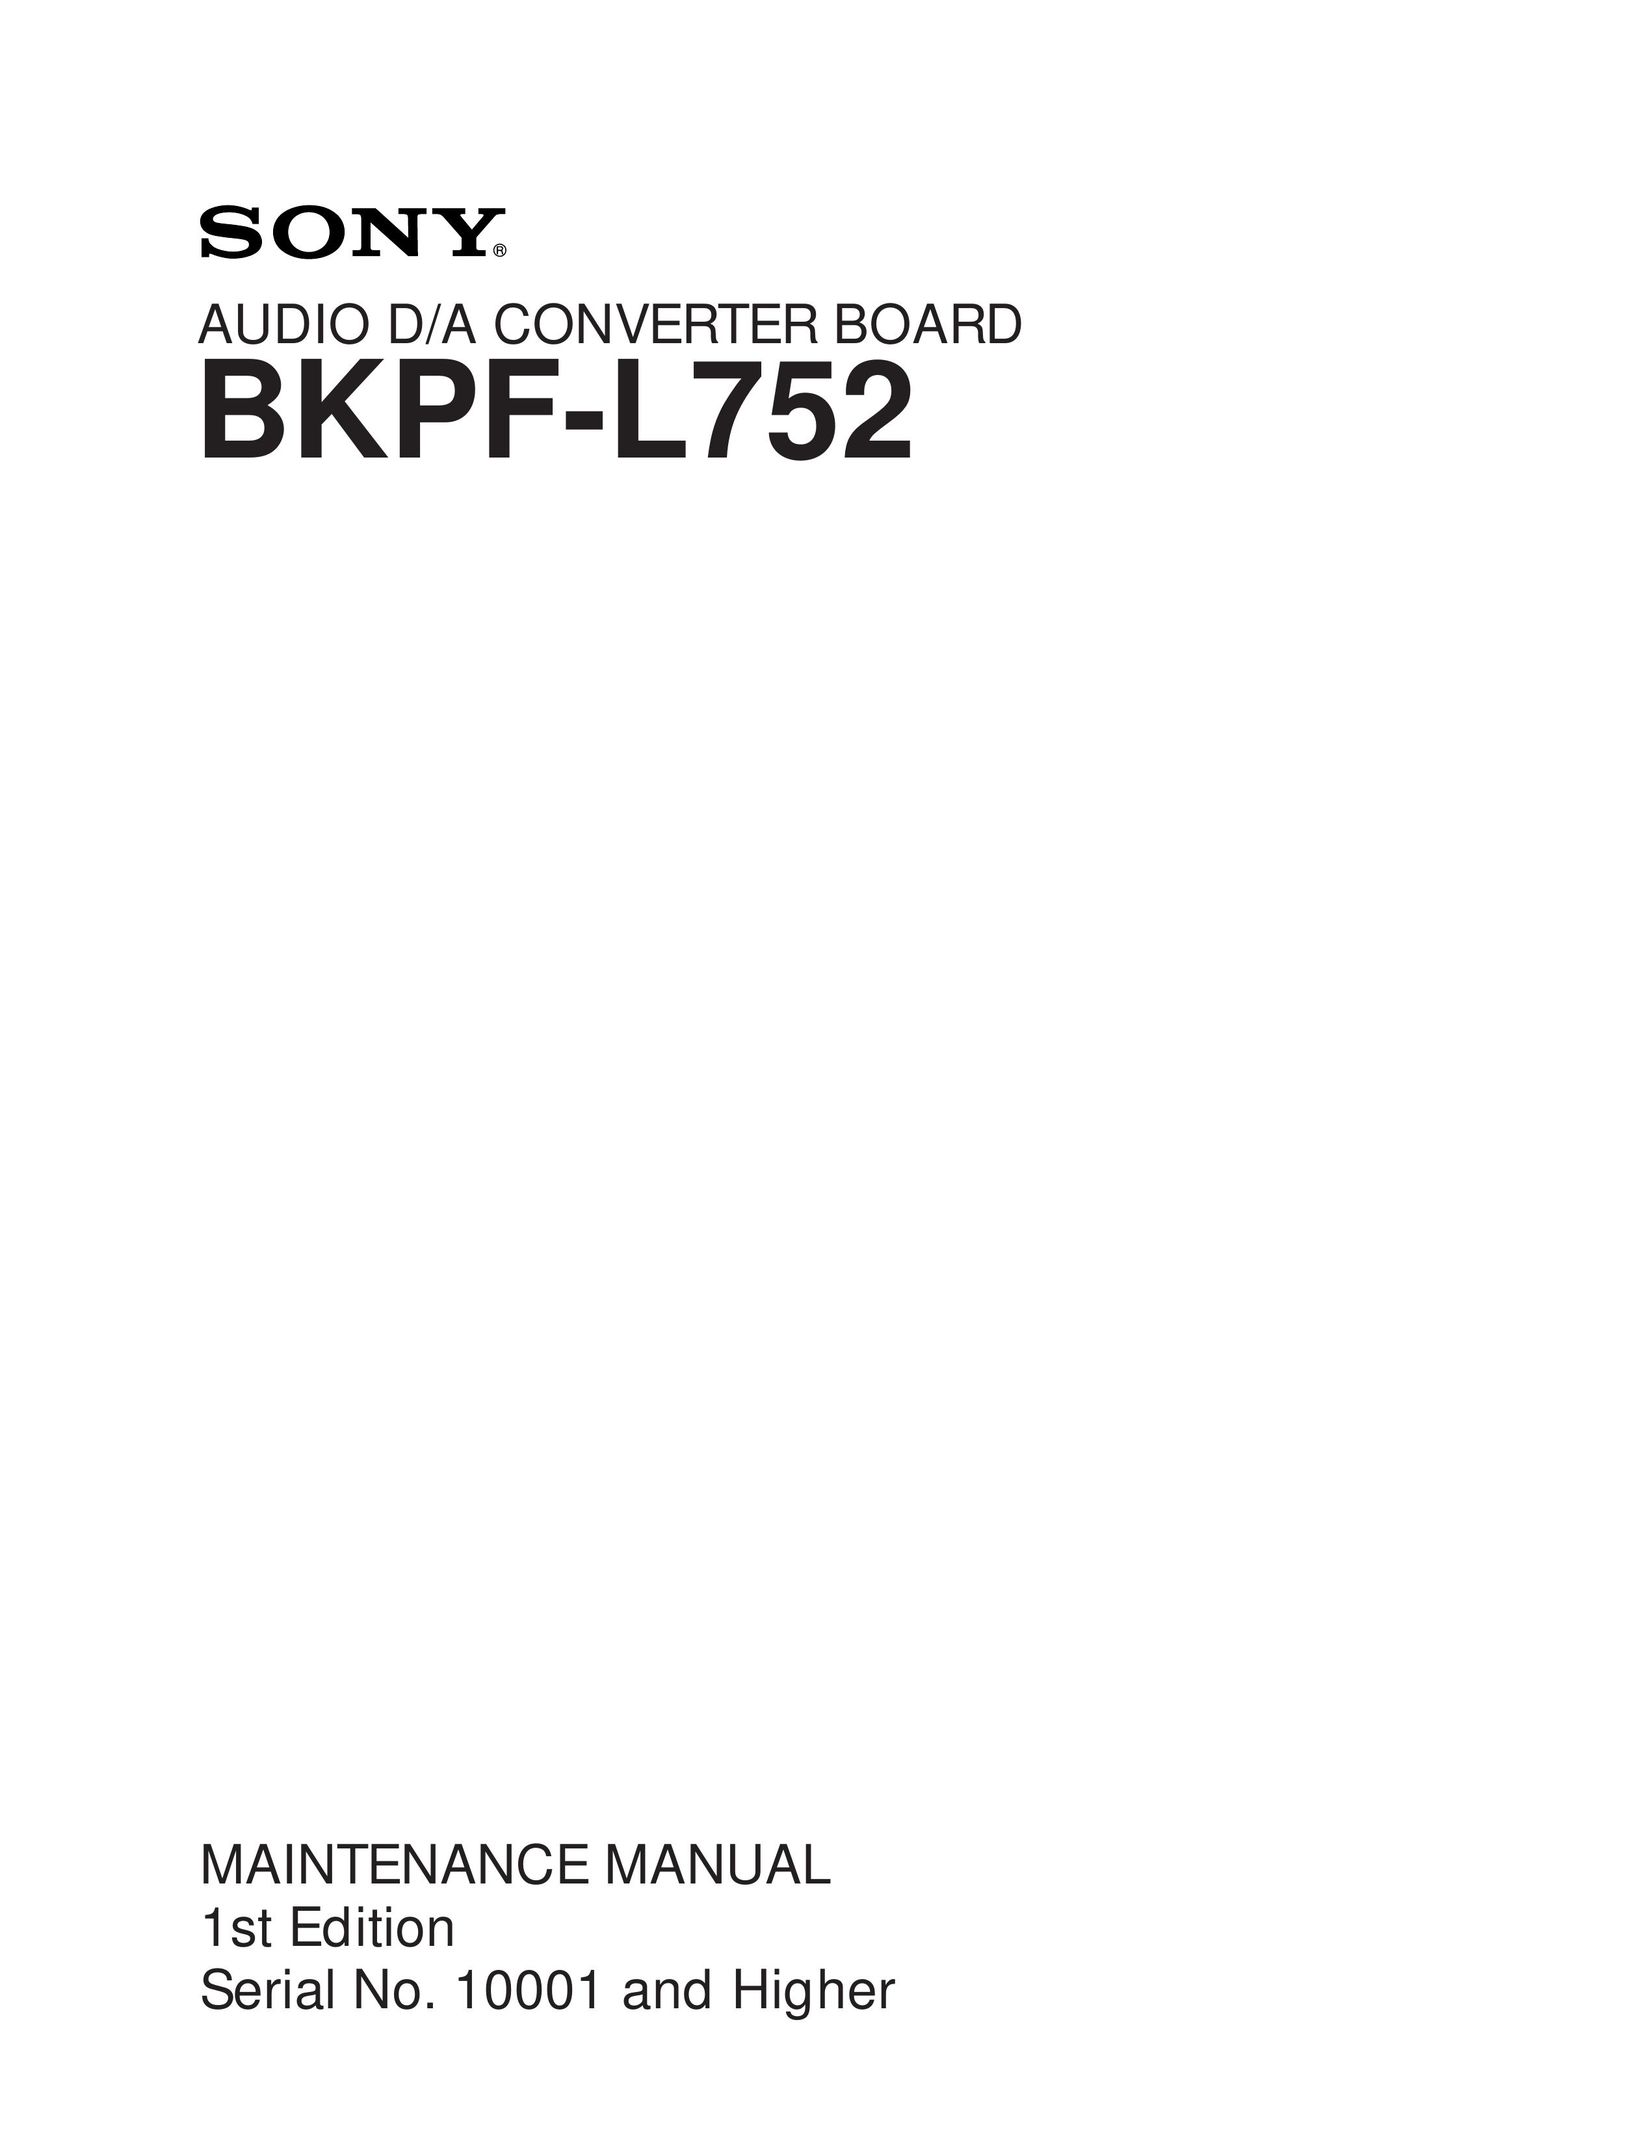 Sony BKPF-L752 TV Converter Box User Manual